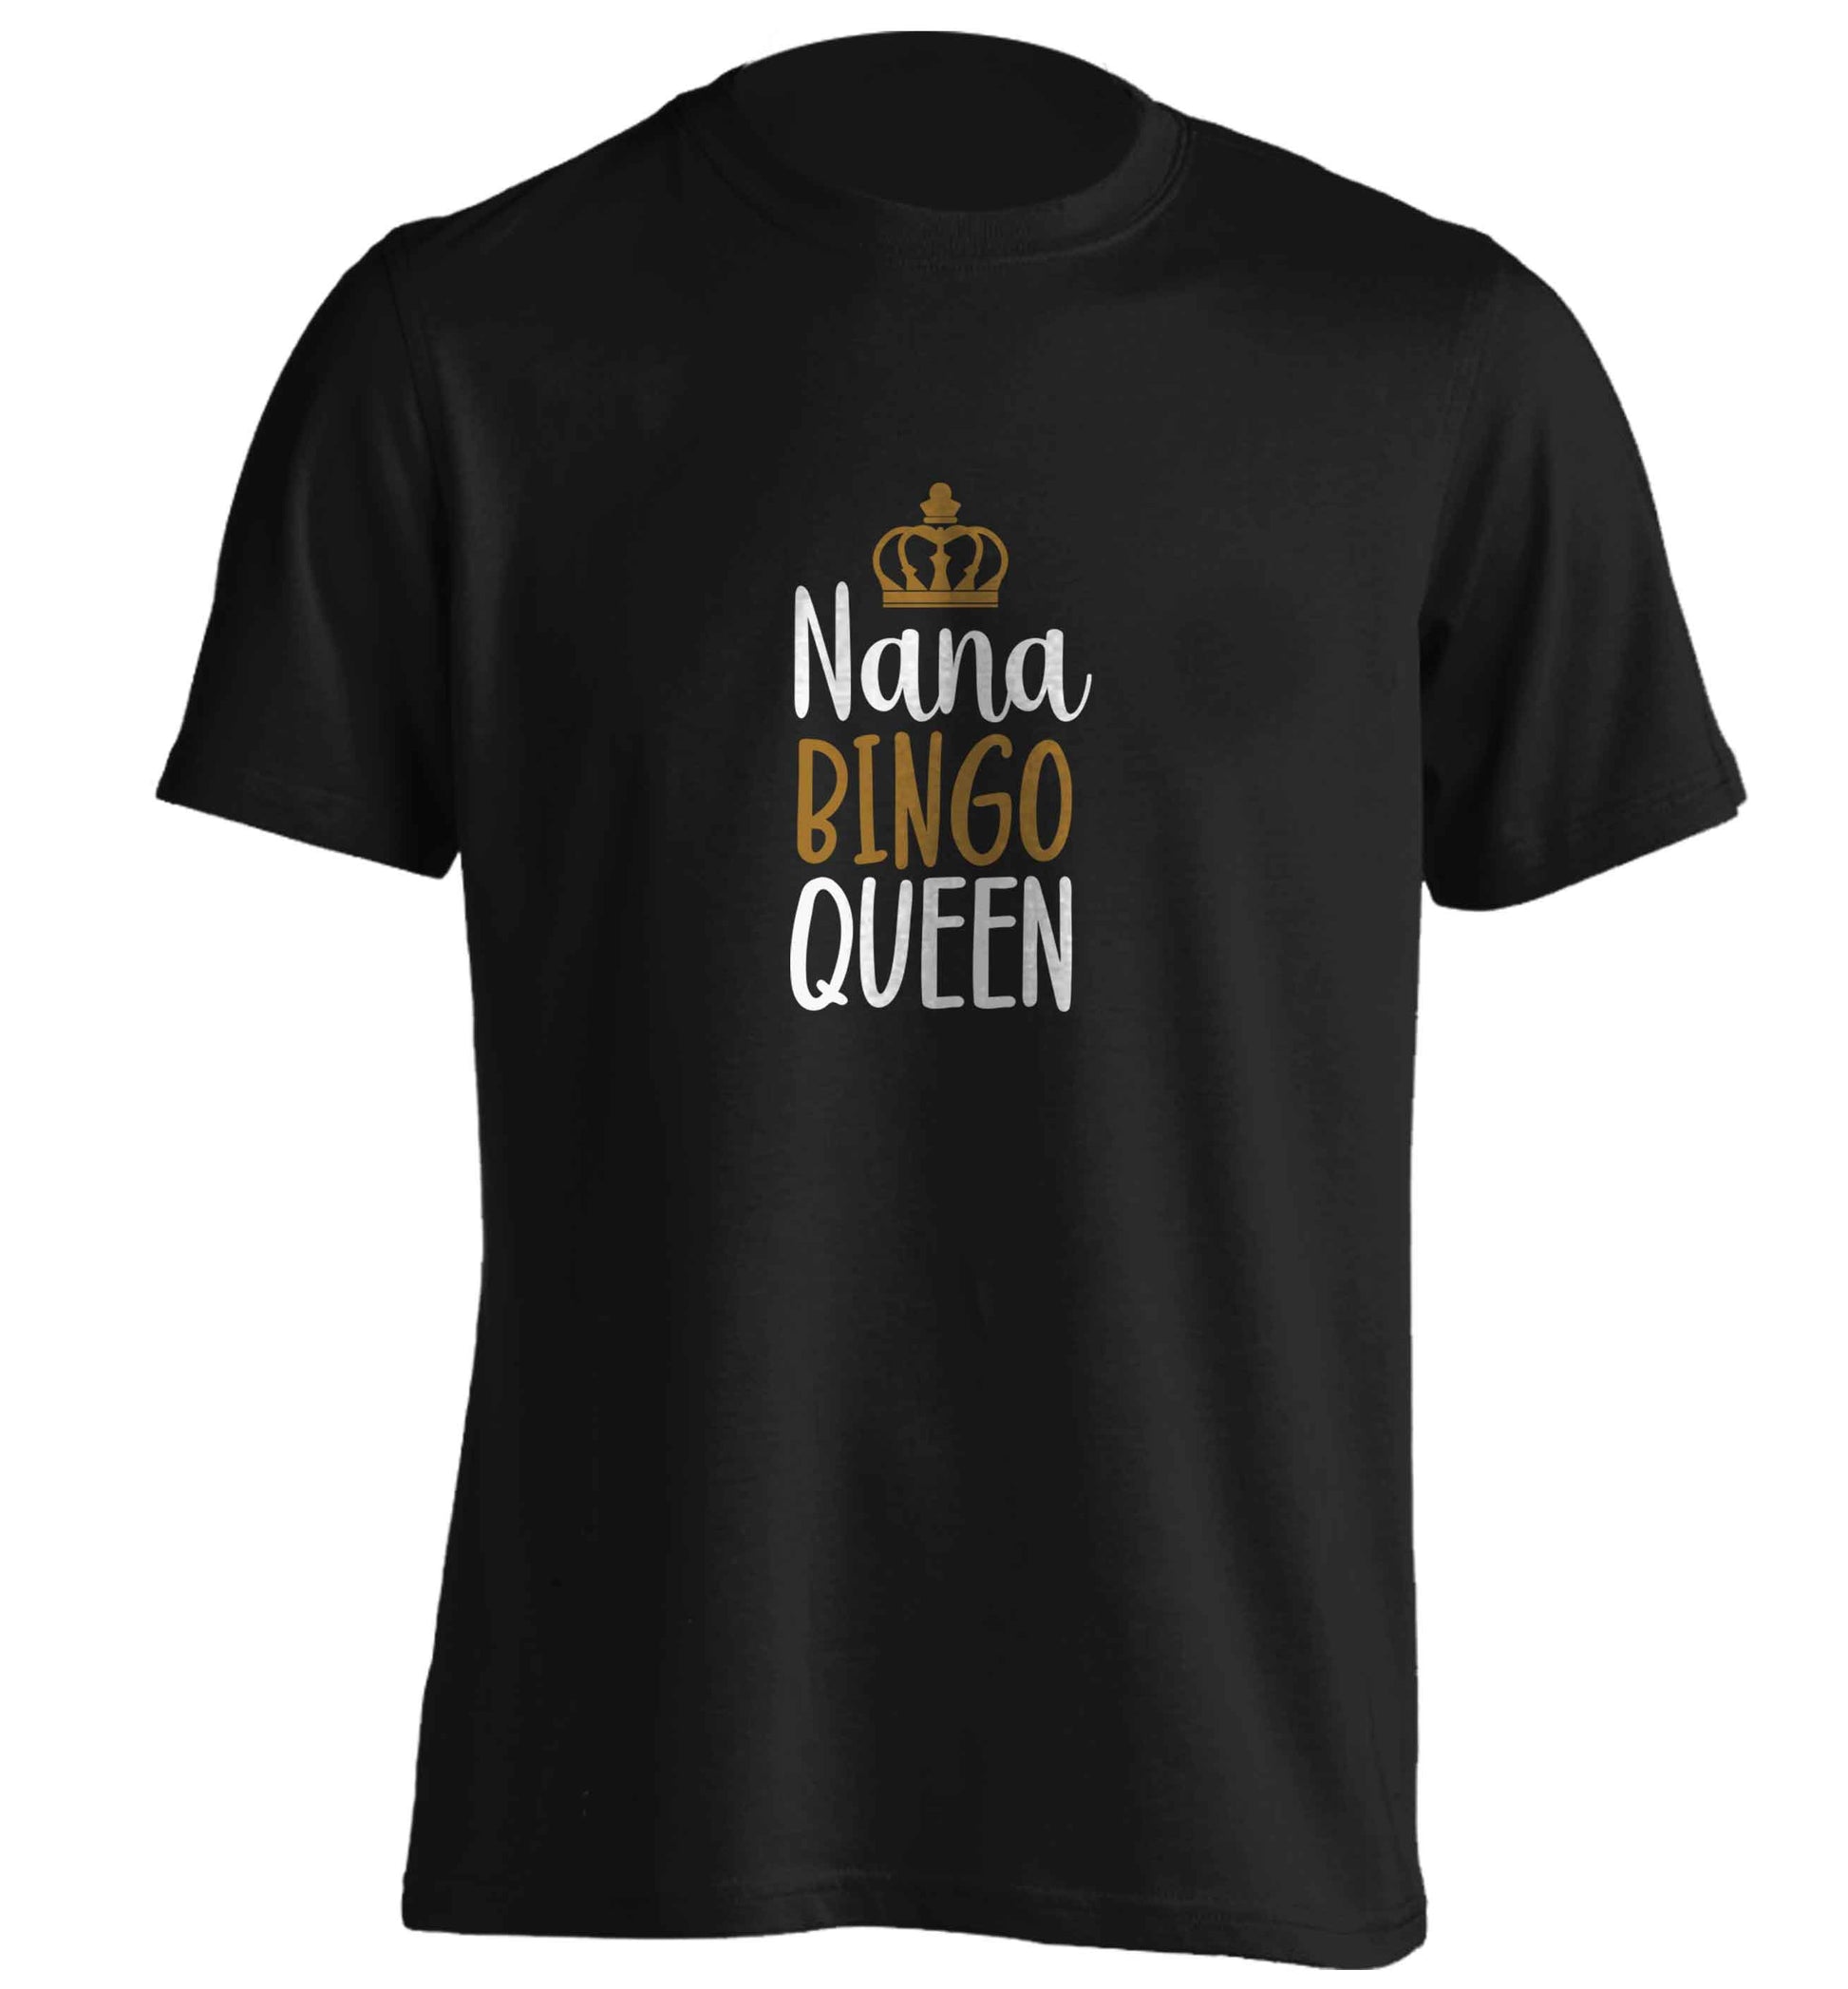 Personalised bingo queen adults unisex black Tshirt 2XL